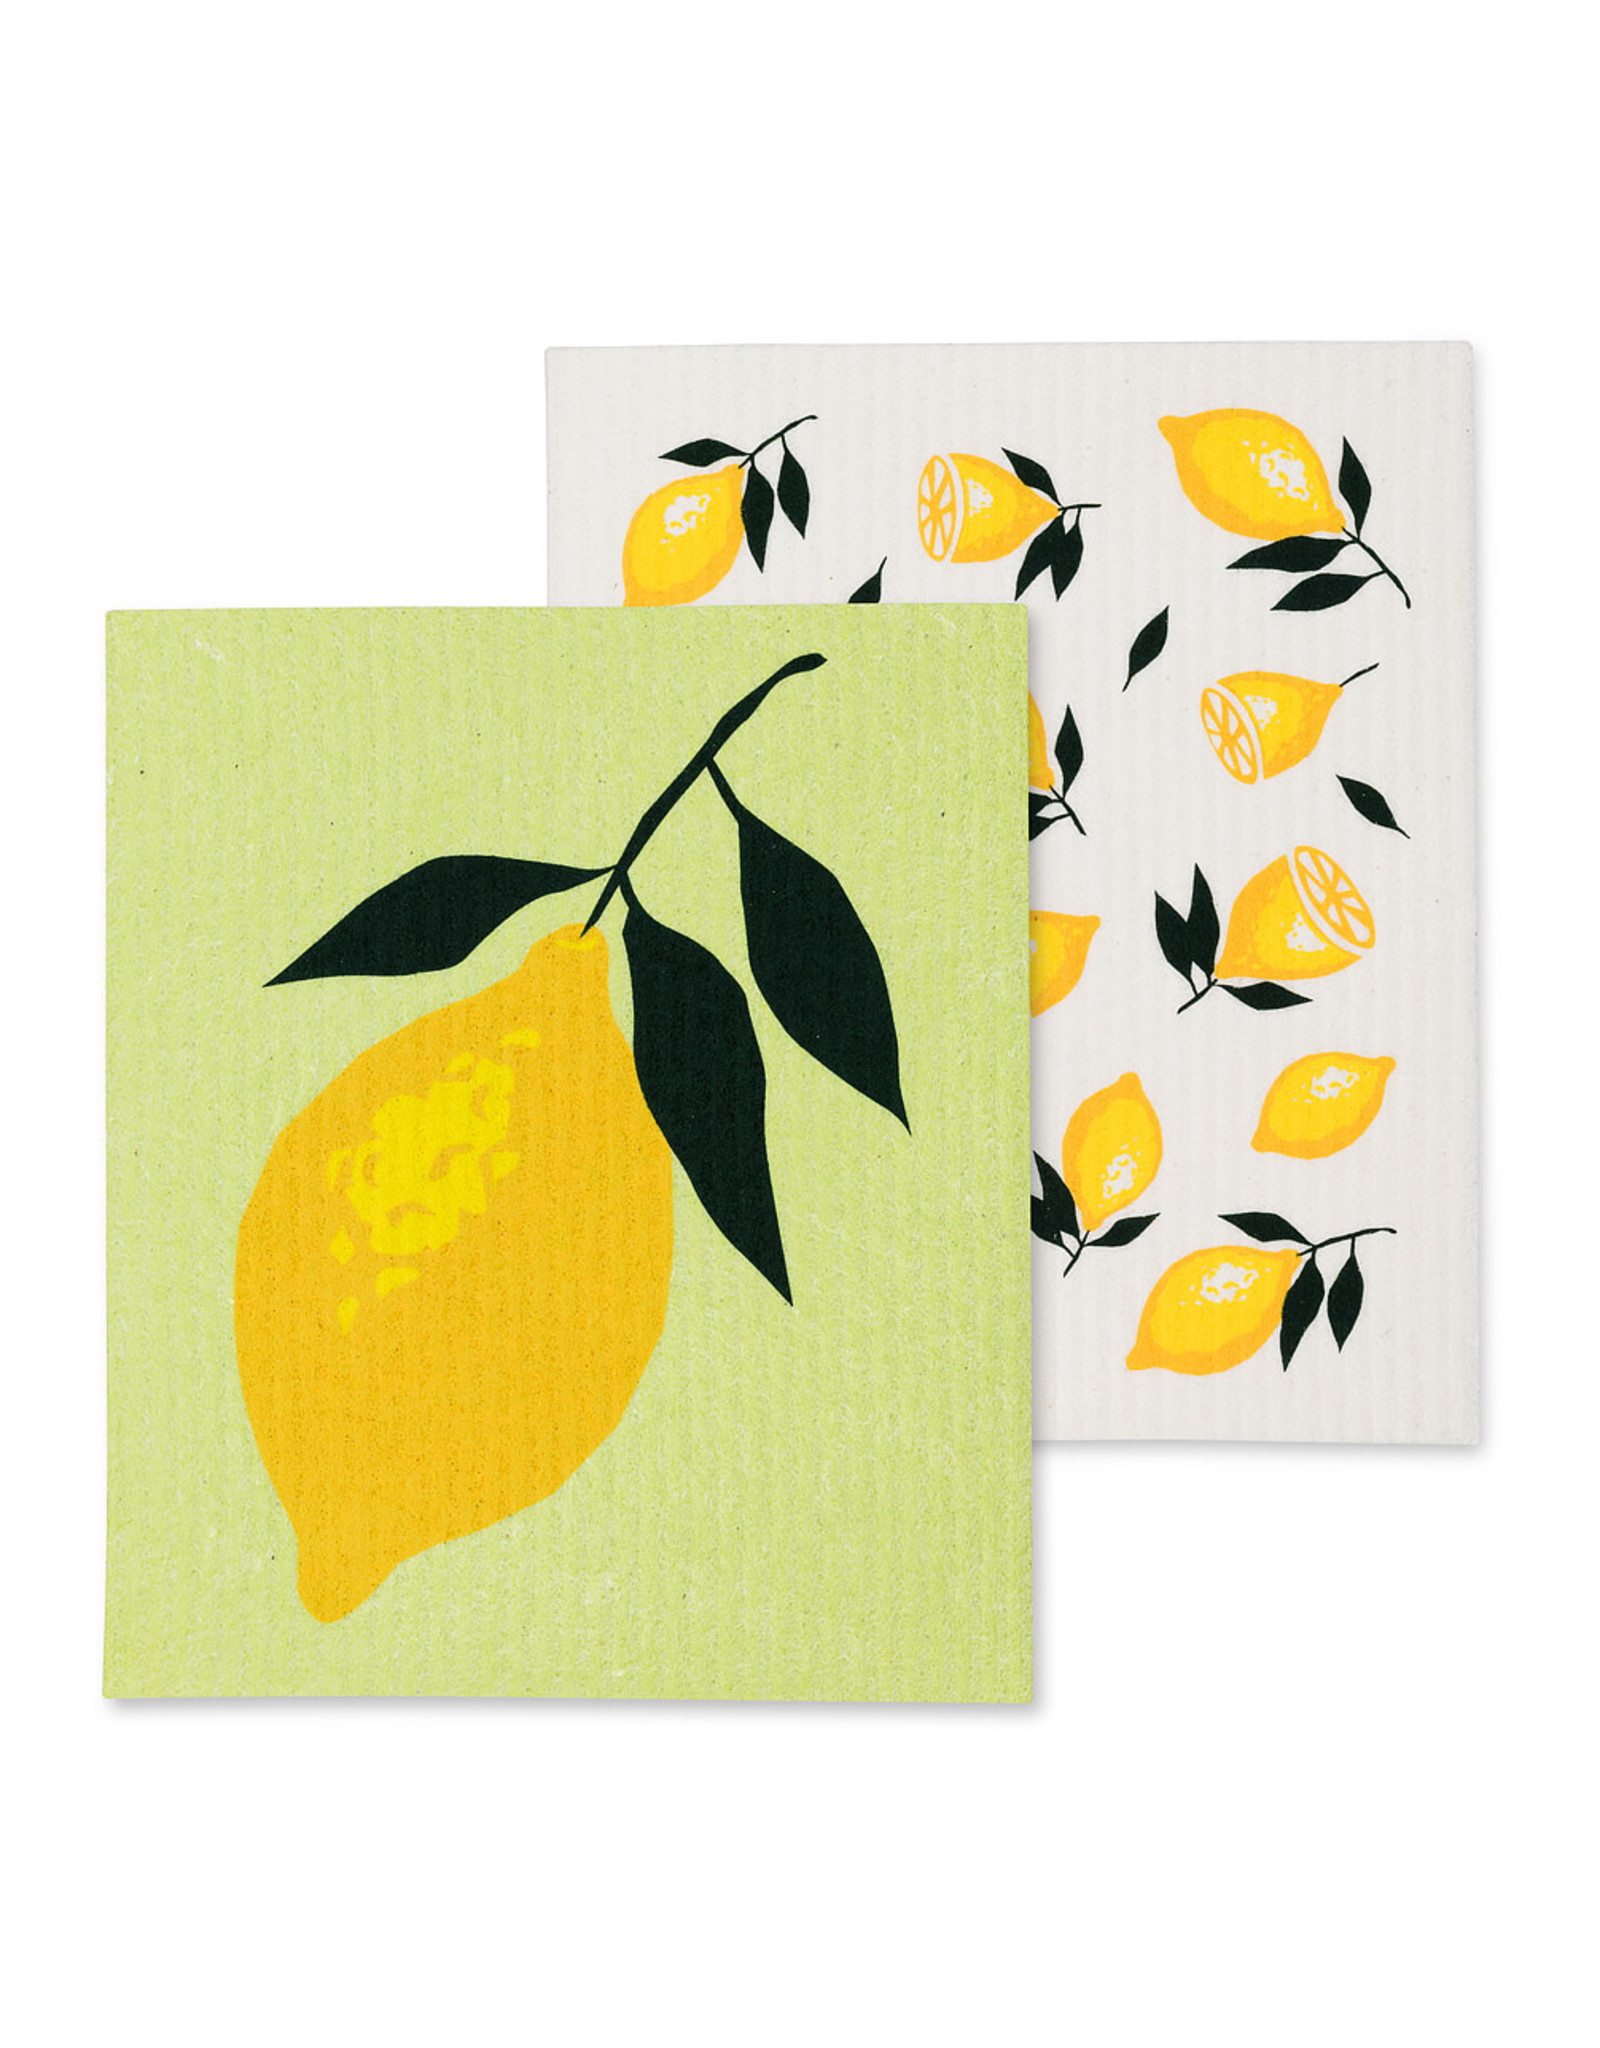 Lemons Swedish Dishcloths - Set of 2